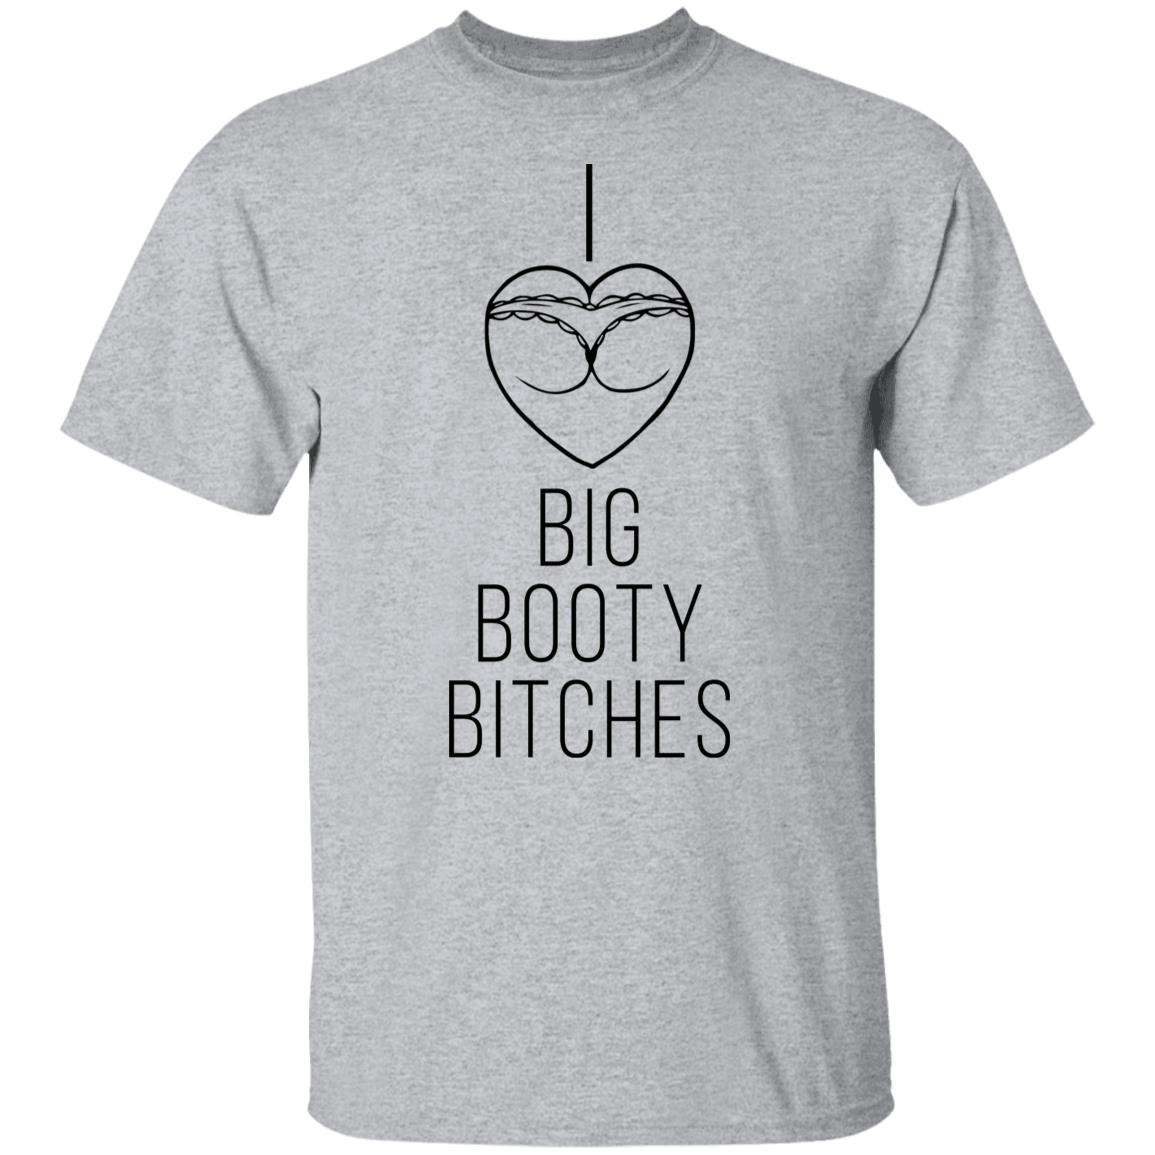 I love big booty bitches shirt